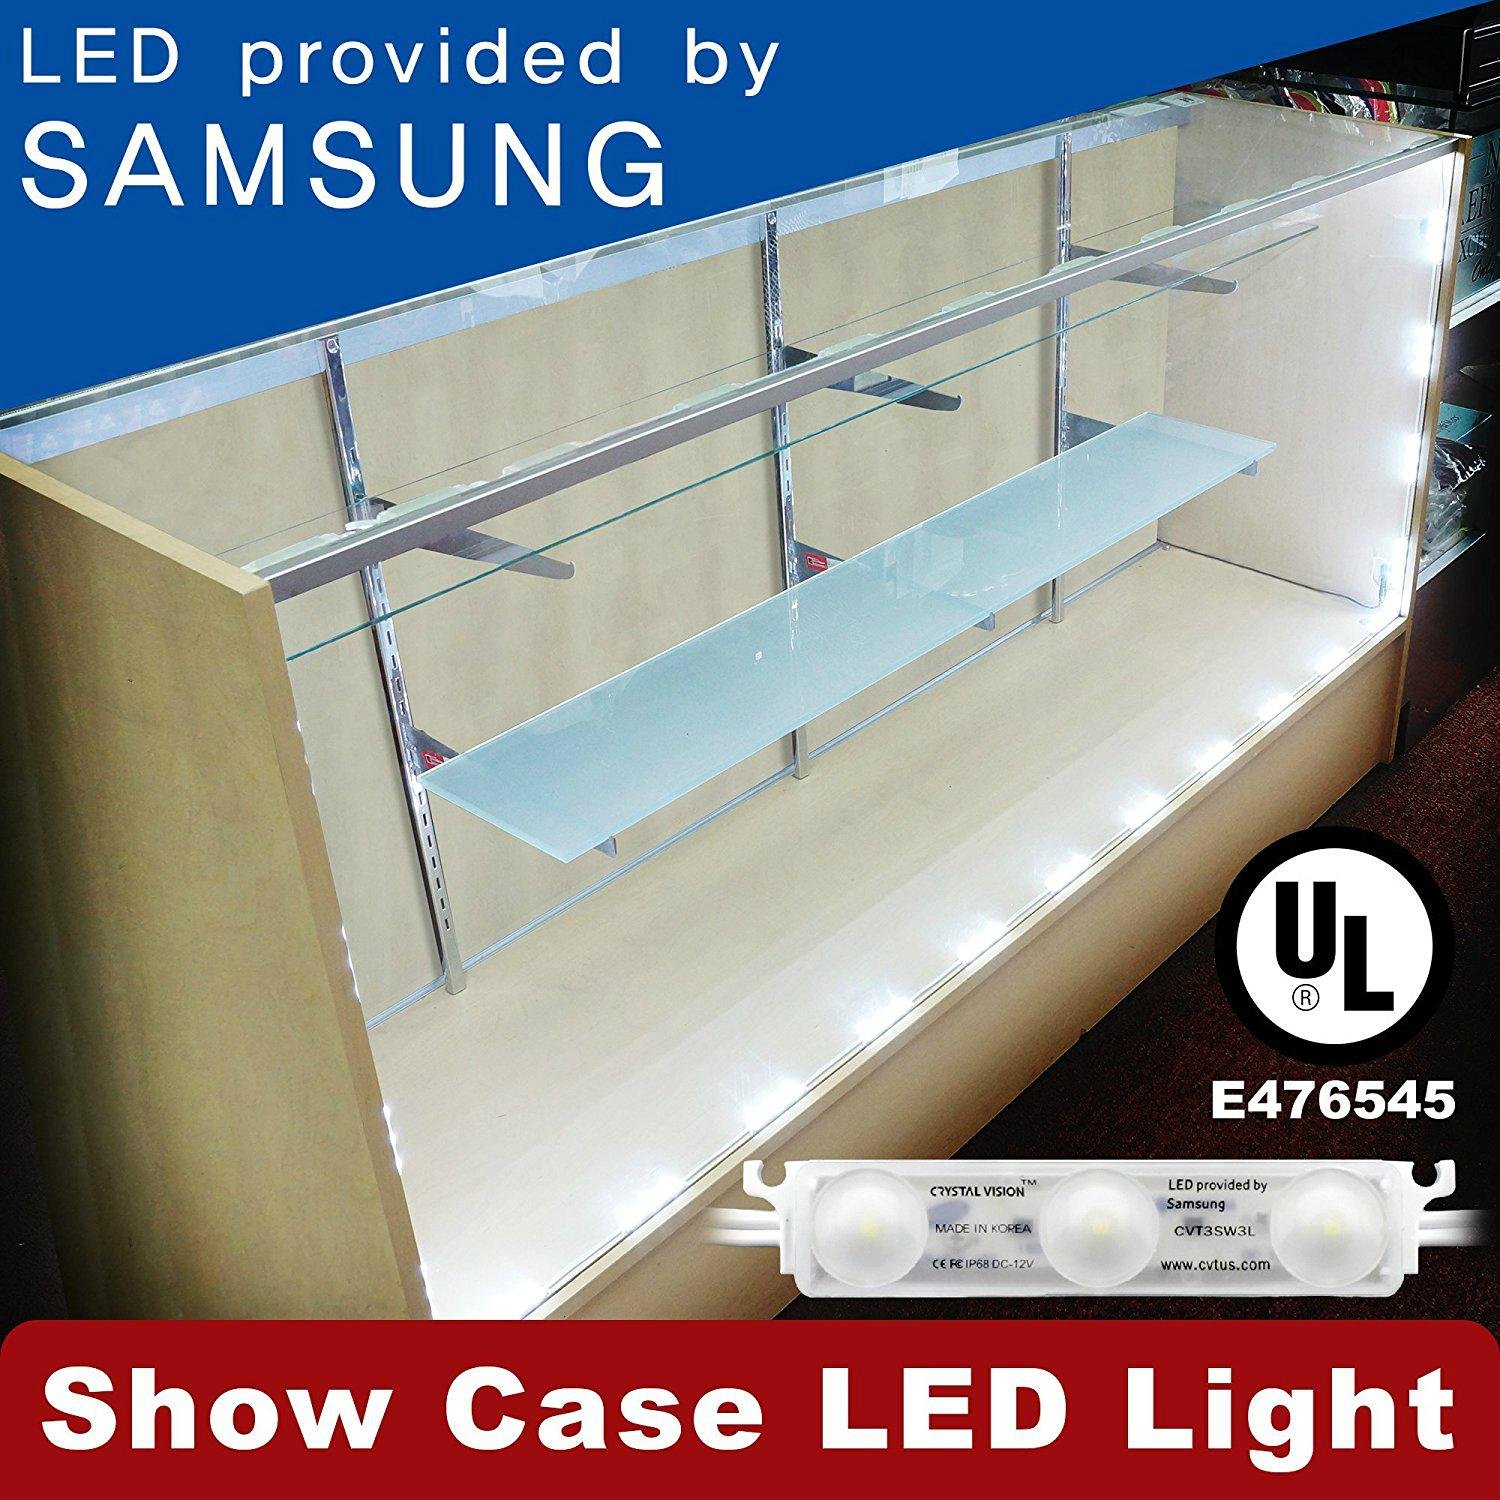 Crystal Vision Premium Samsung Pre-Installed LED Kit for Showcase 2